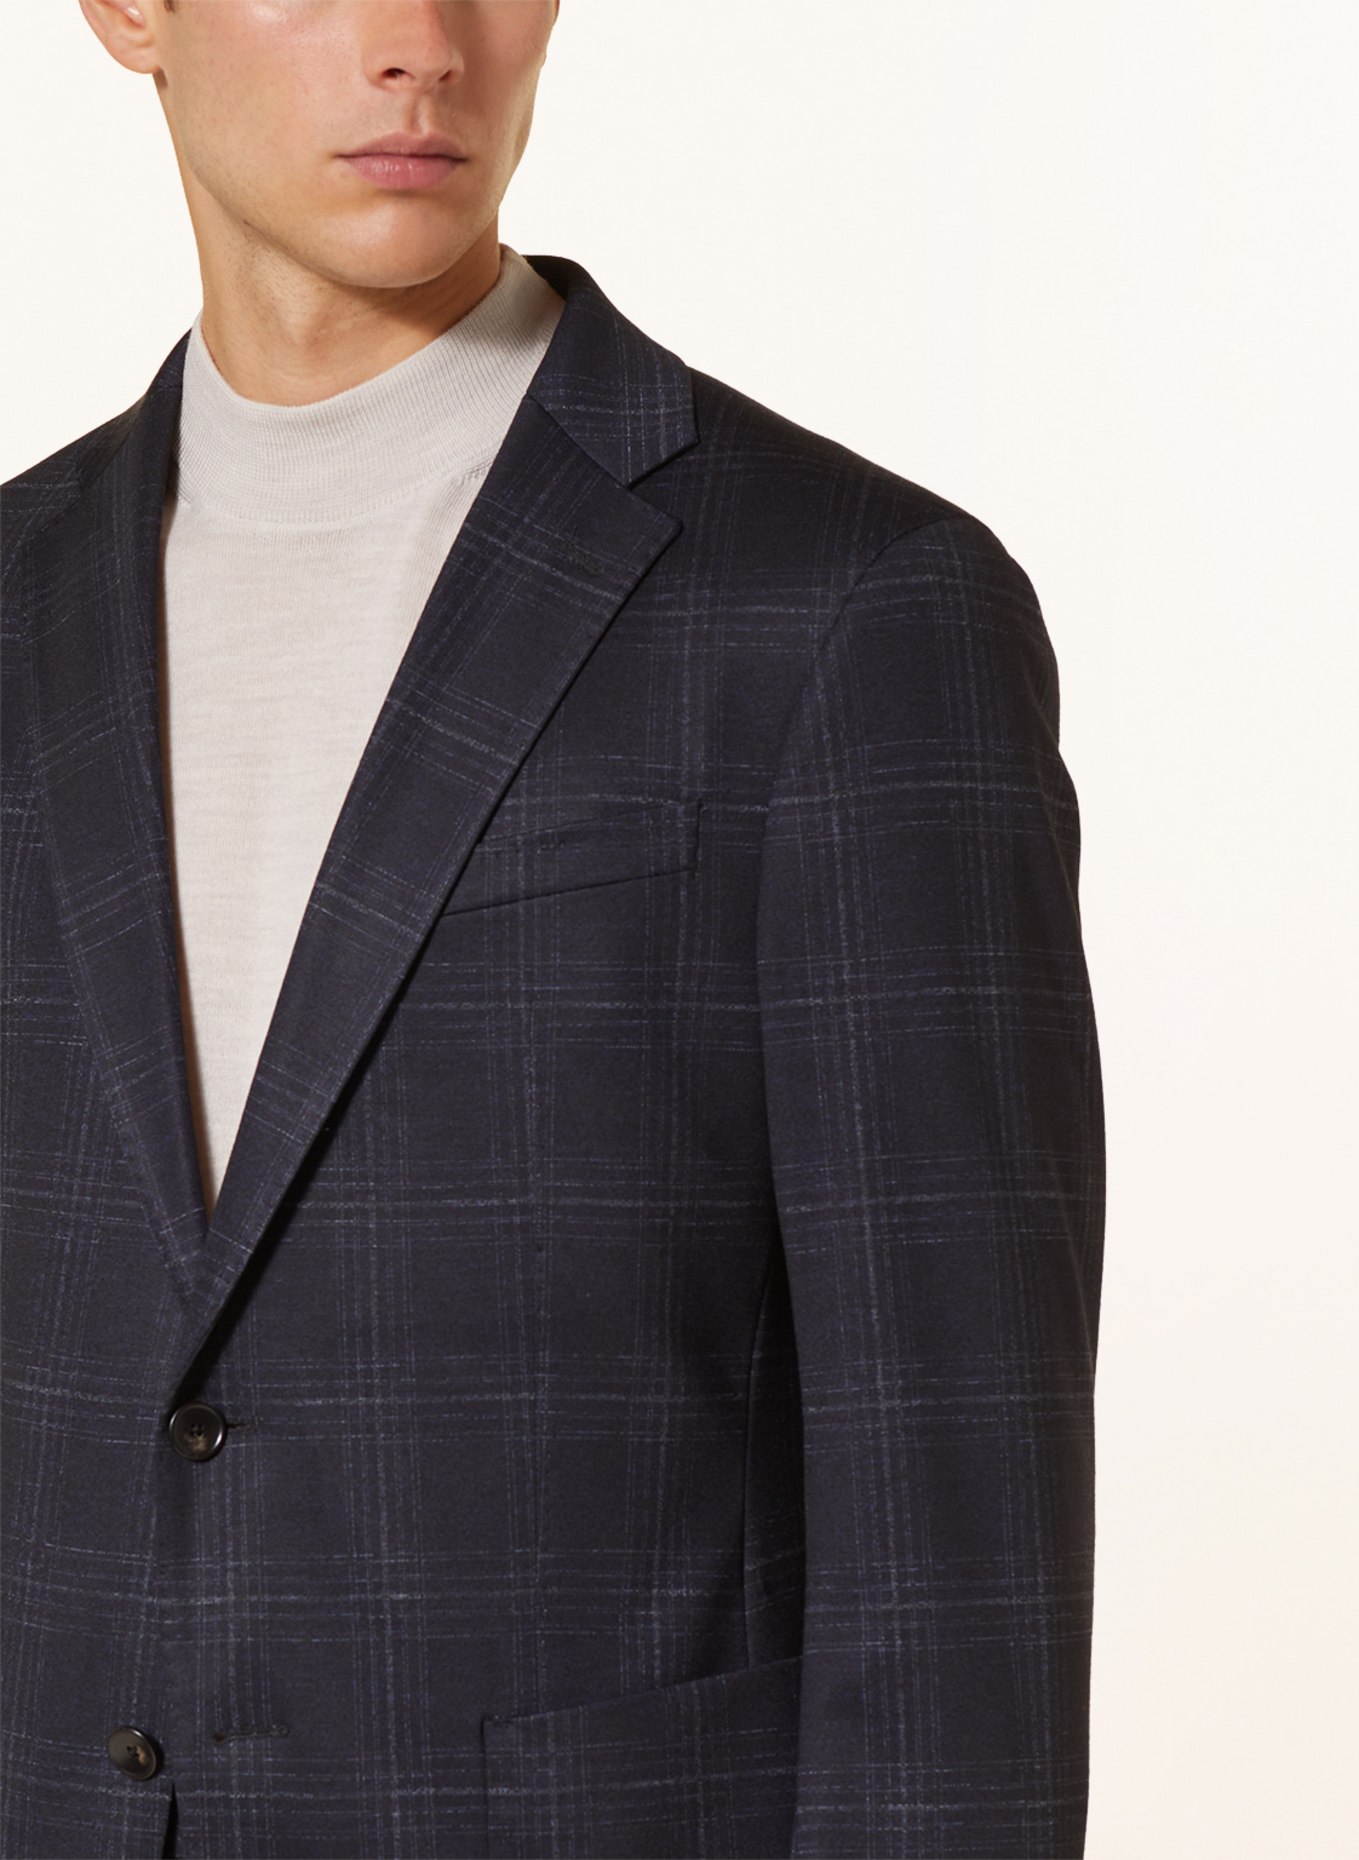 JOOP! Suit jacket HUSTLE slim fit in jersey, Color: 405 Dark Blue                  405 (Image 5)